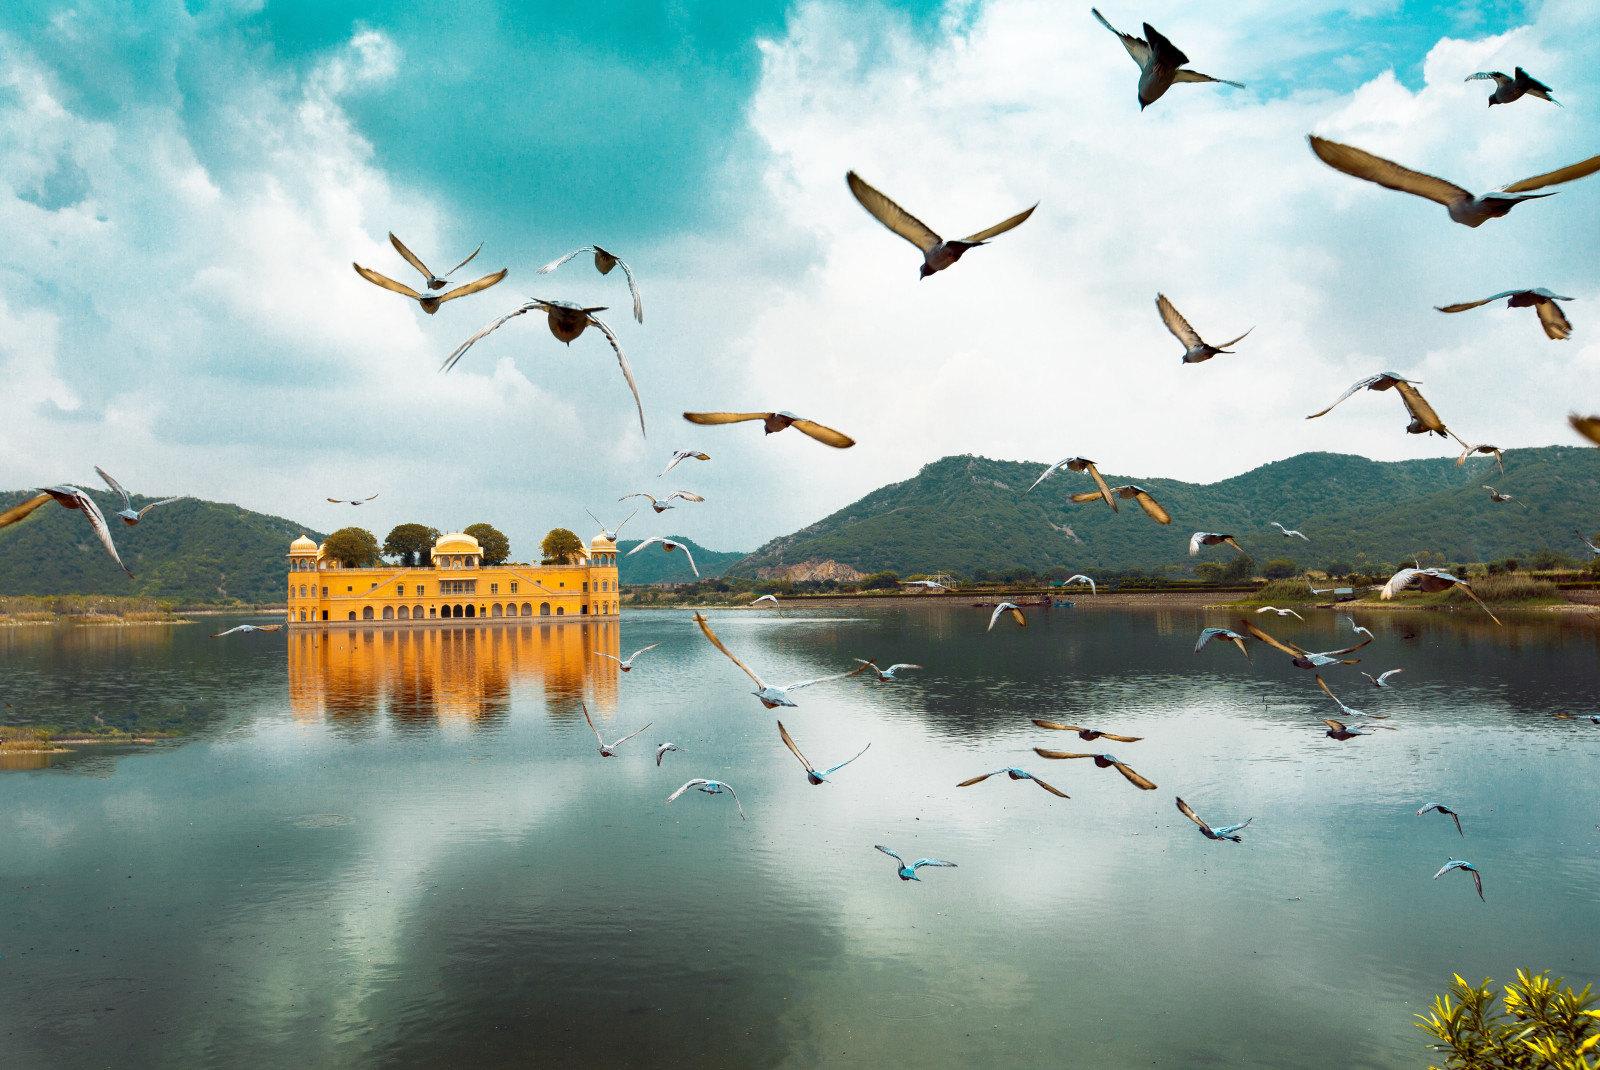 Jaipur travel guide. 